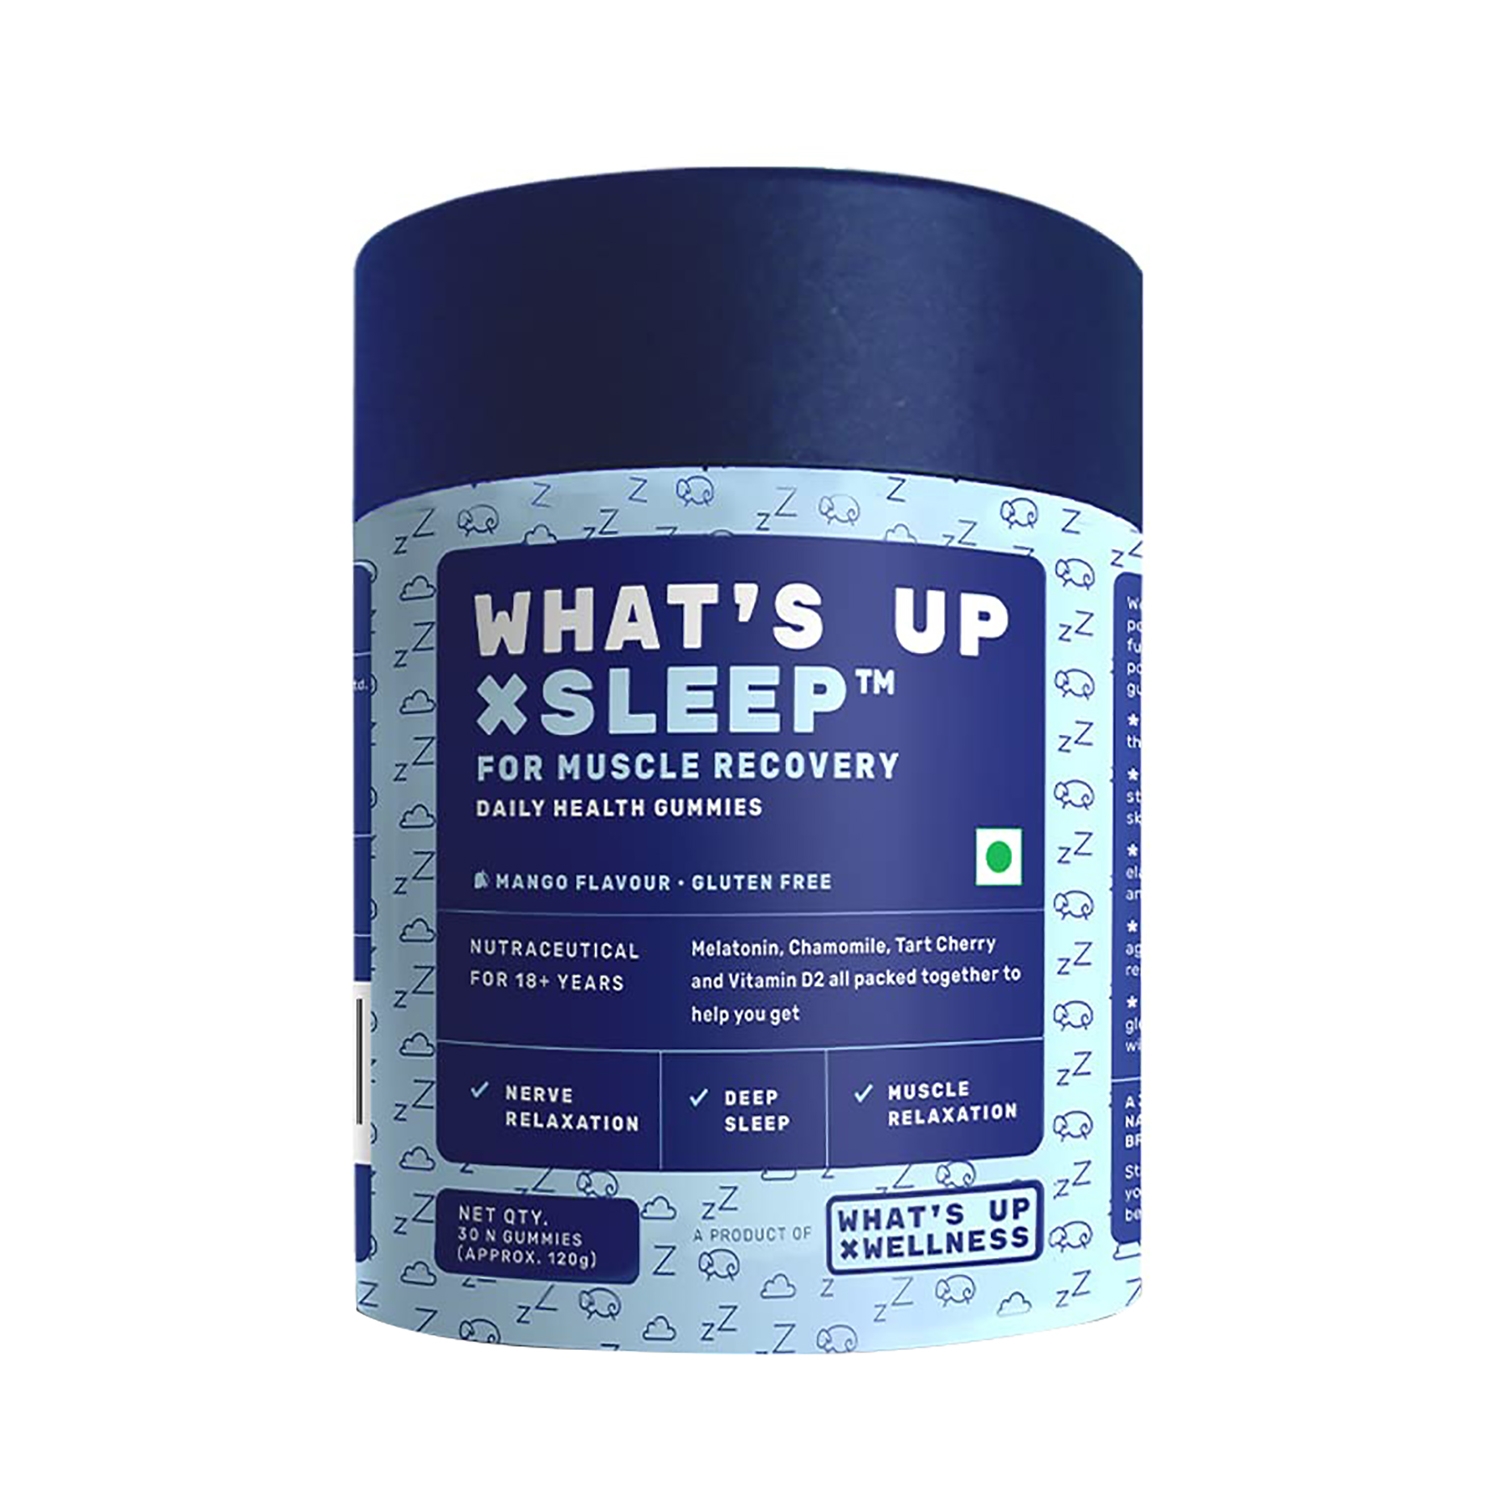 What's Up Wellness | What's Up Wellness Sleep Gummies (30pcs)